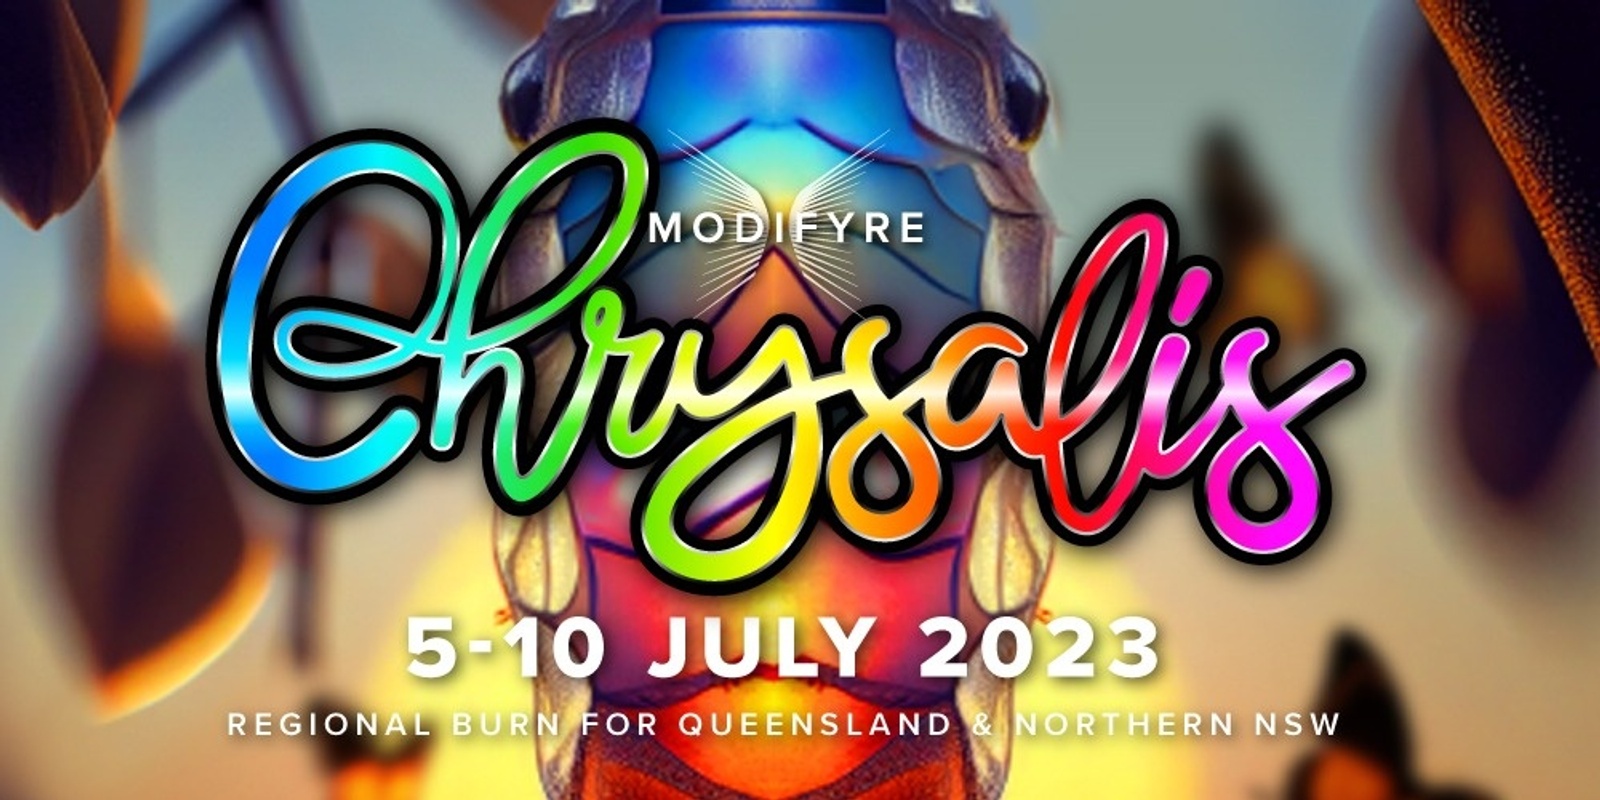 Banner image for Modifyre 2023 - Chrysalis 